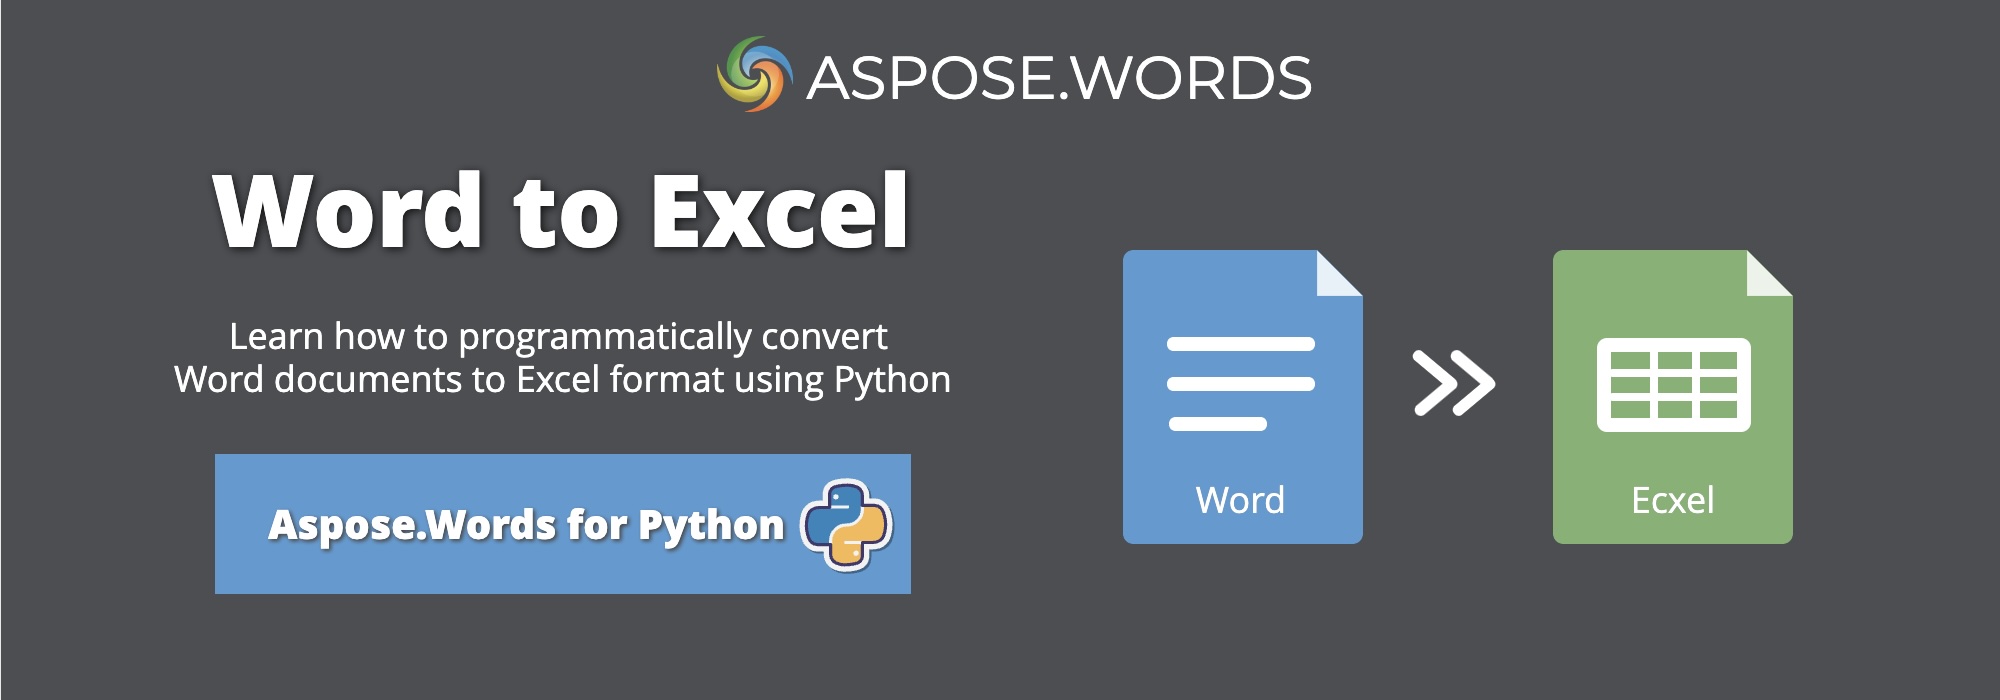 Convertir Word a Excel en Python | Convertir DOCX a XLSX en Python